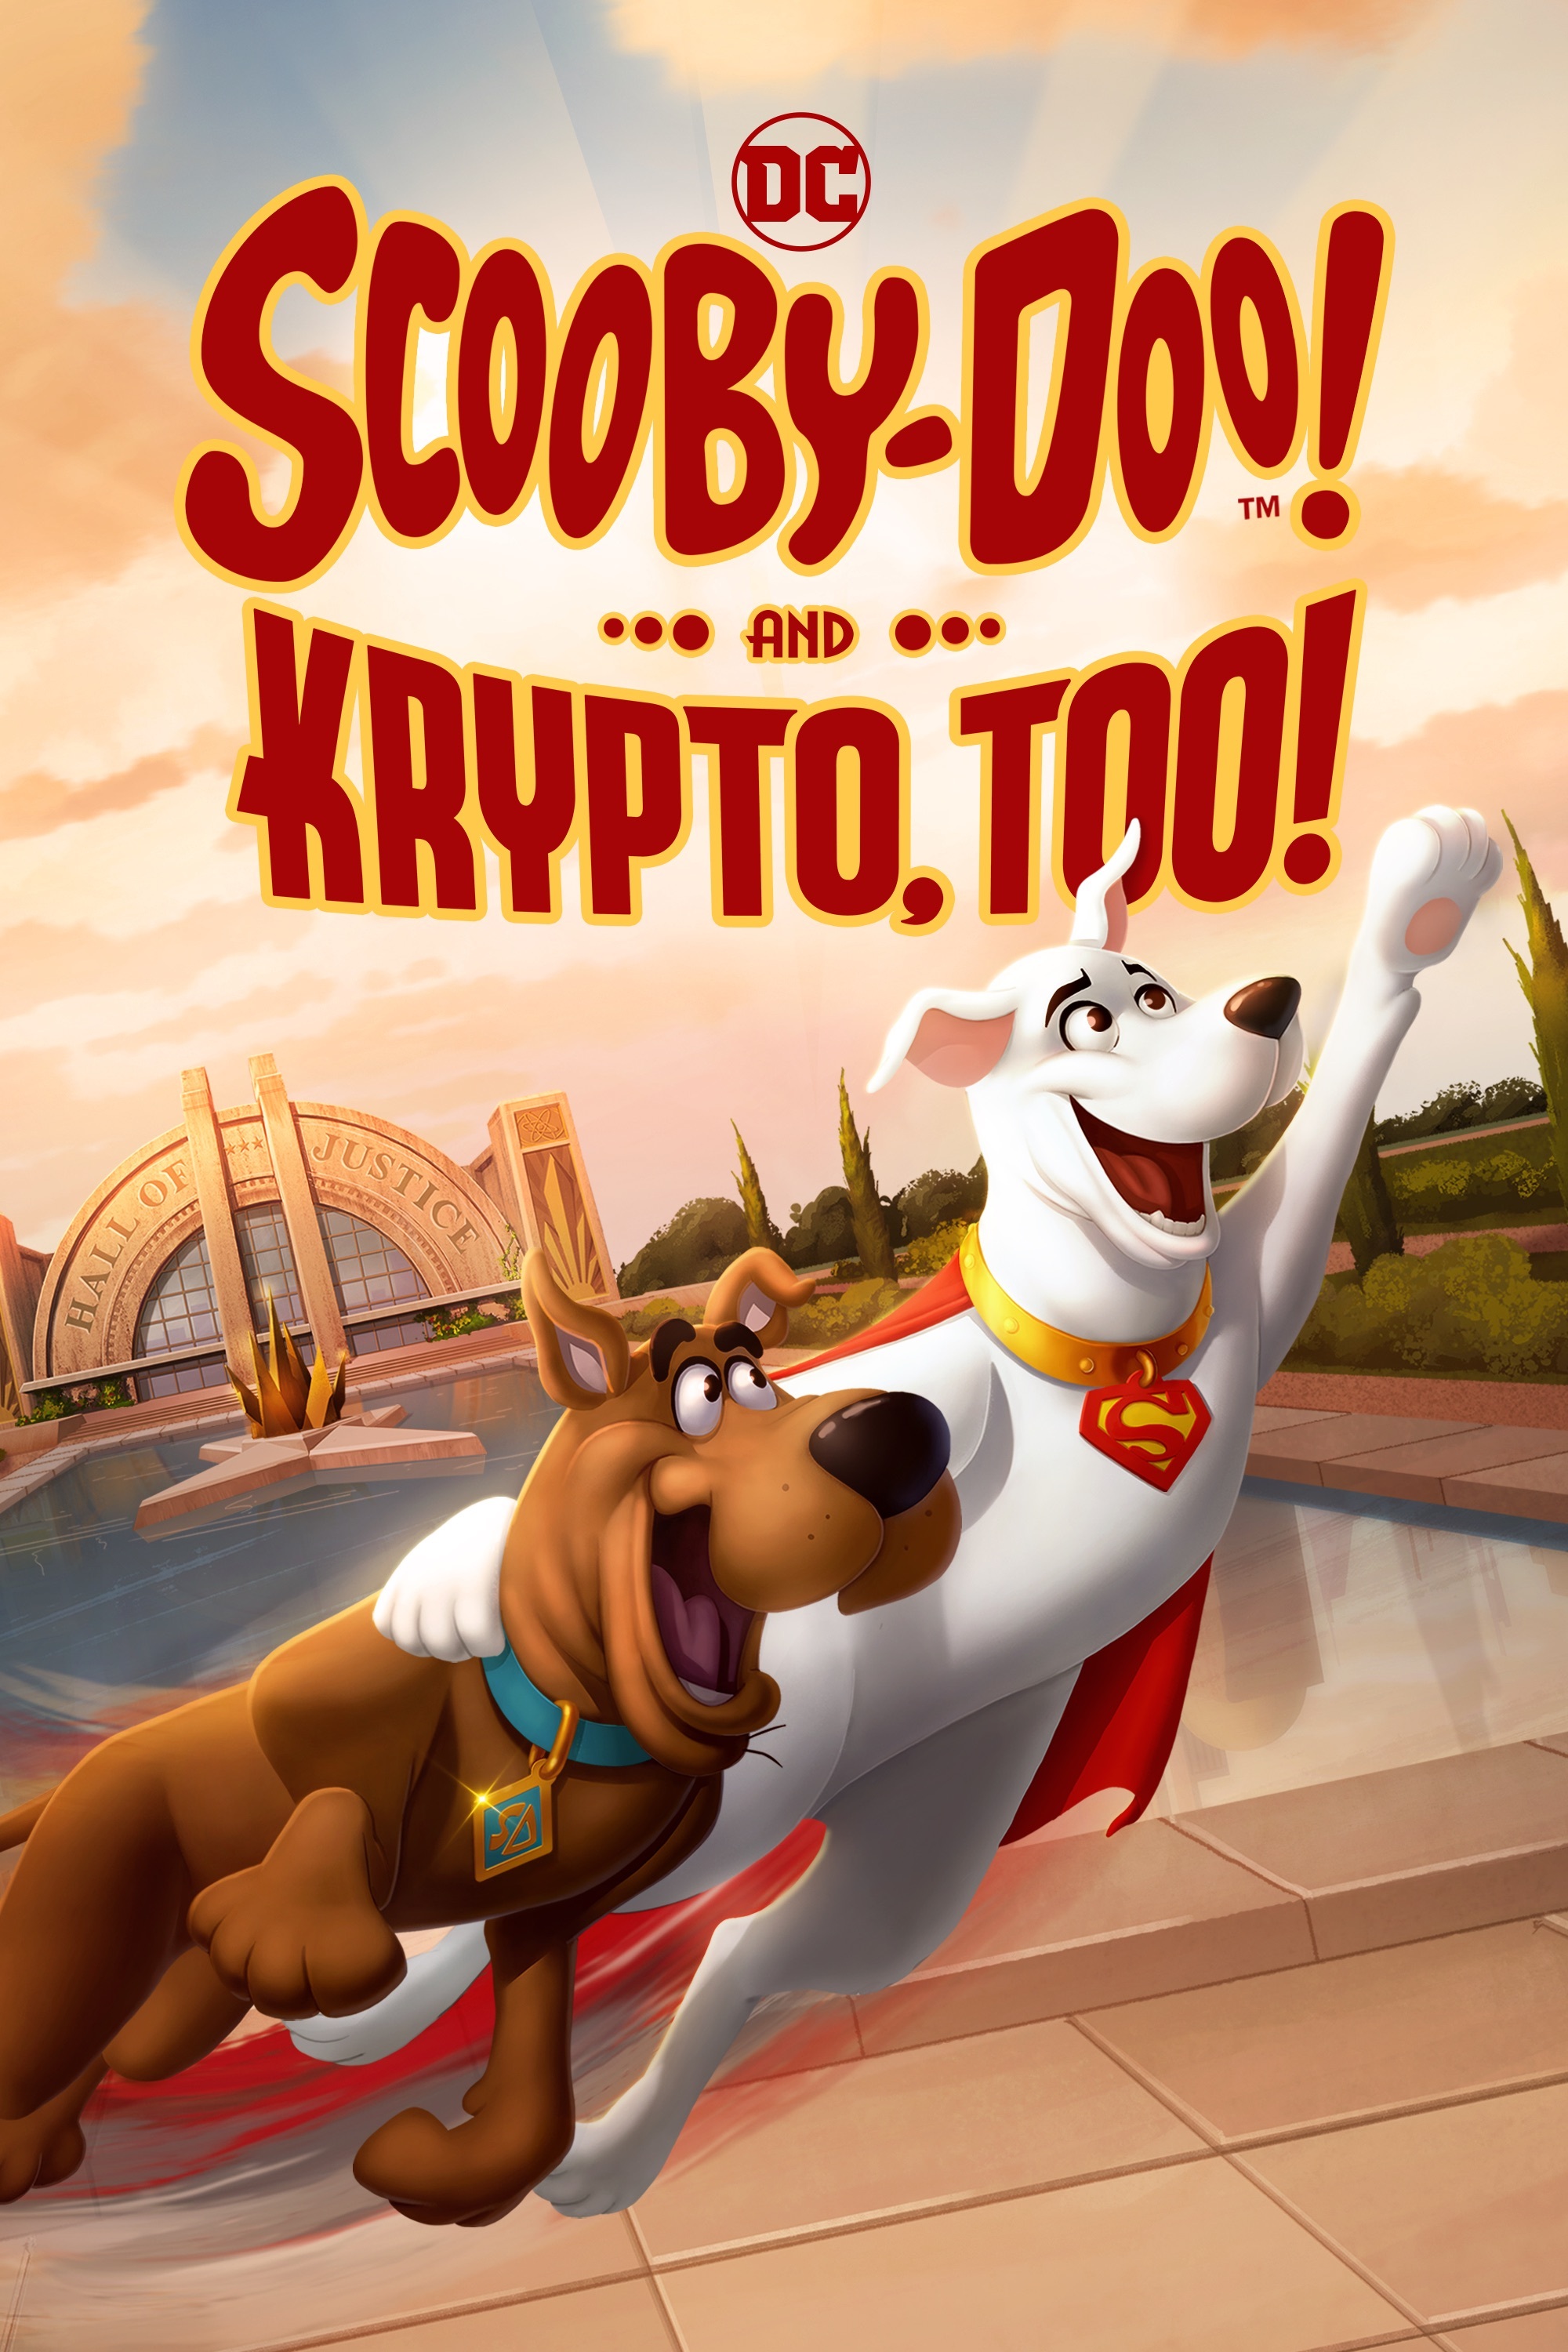 Poster Phim Scooby-Doo! Và Cả Krypto Nữa! (Scooby-Doo! And Krypto Too!)